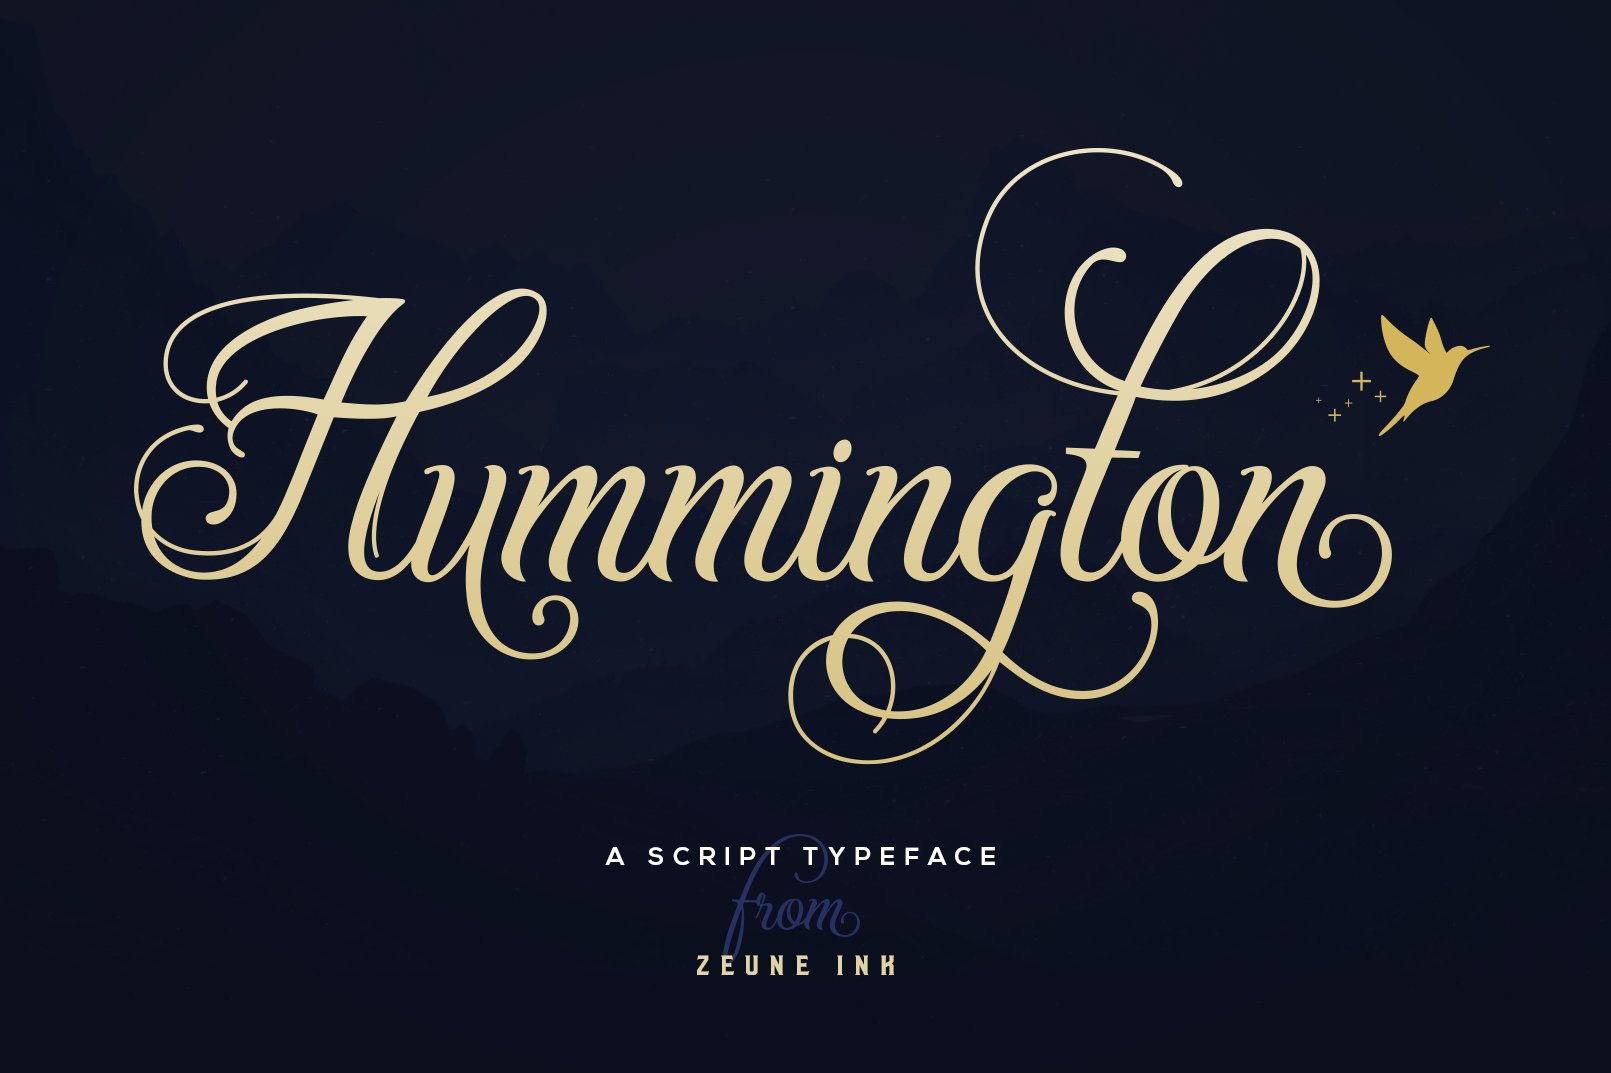 Hummington cover image.